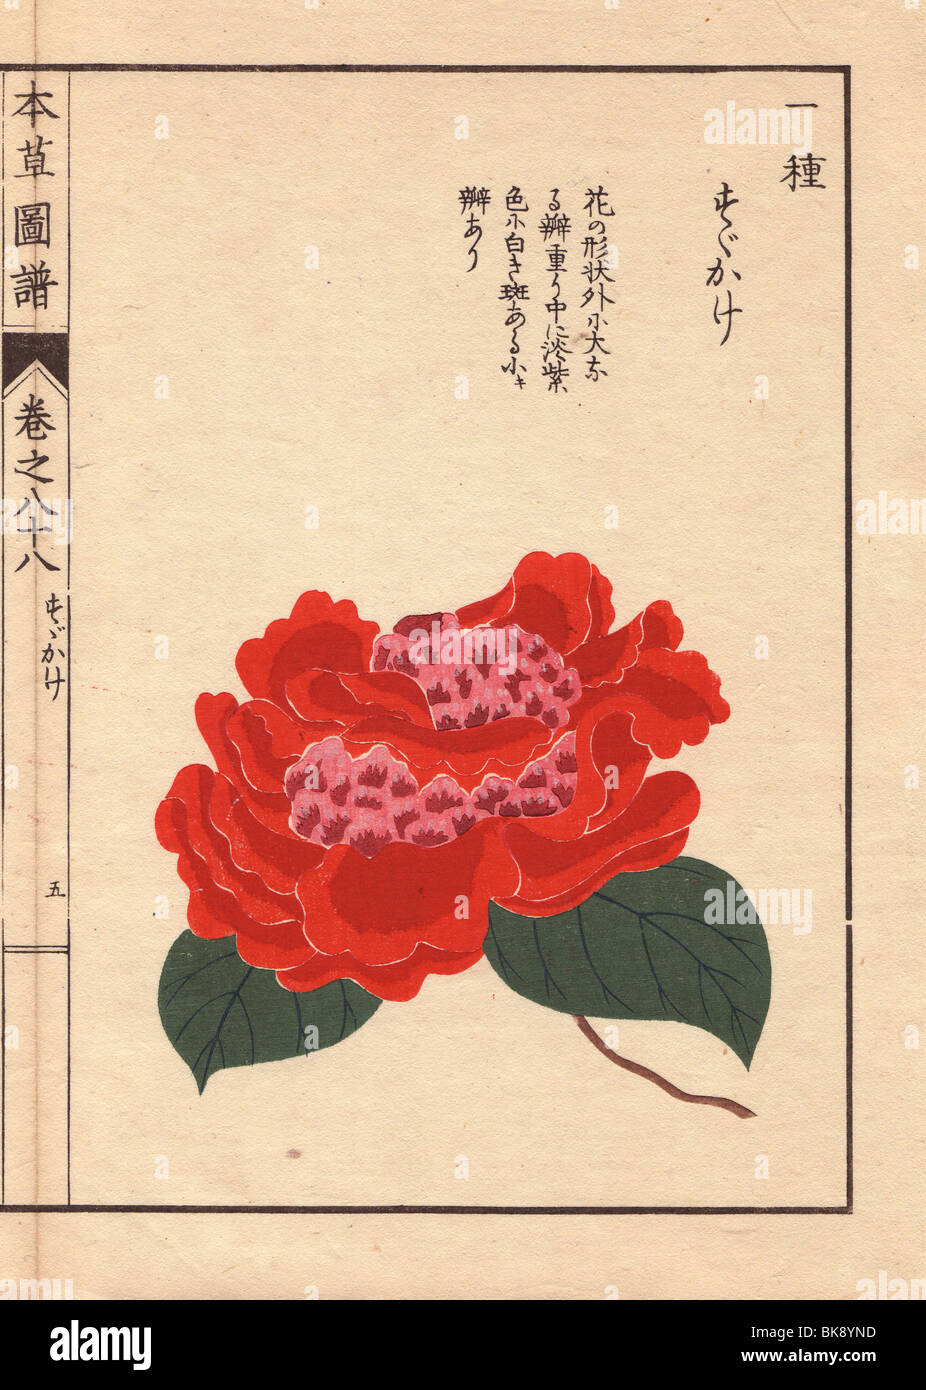 Crimson camellia 'Susukage'  Thea japonica Nois flore pleno forma Stock Photo